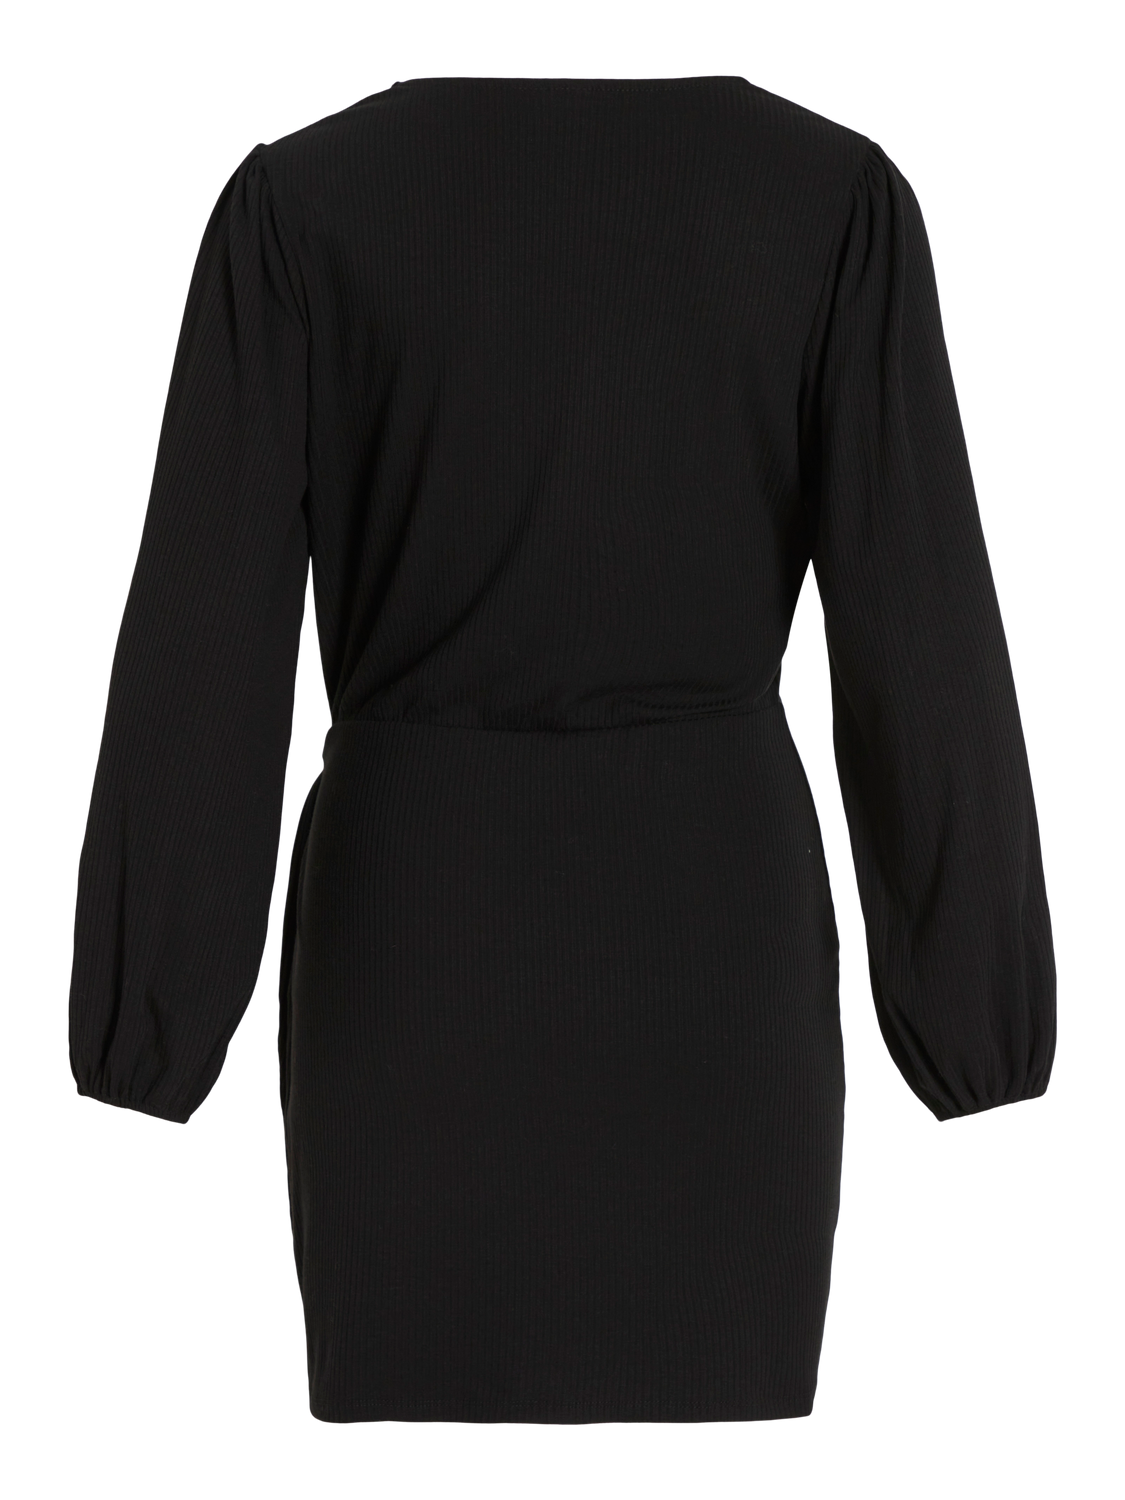 VIWONDA Dress - Black